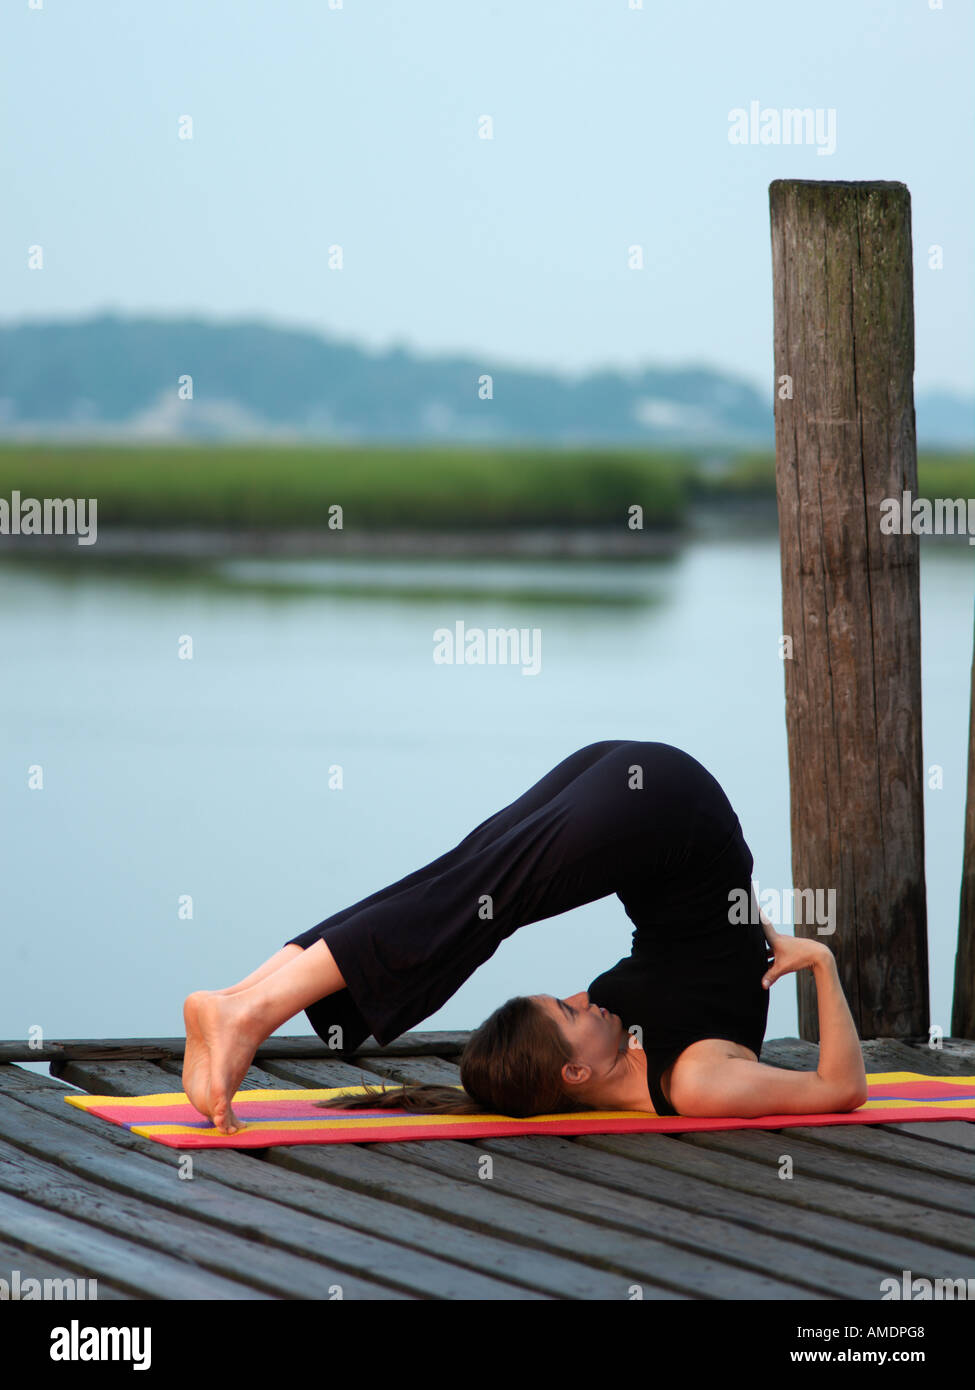 Woman doing yoga plow position early morning on dock Virginia Beach VA Stock Photo